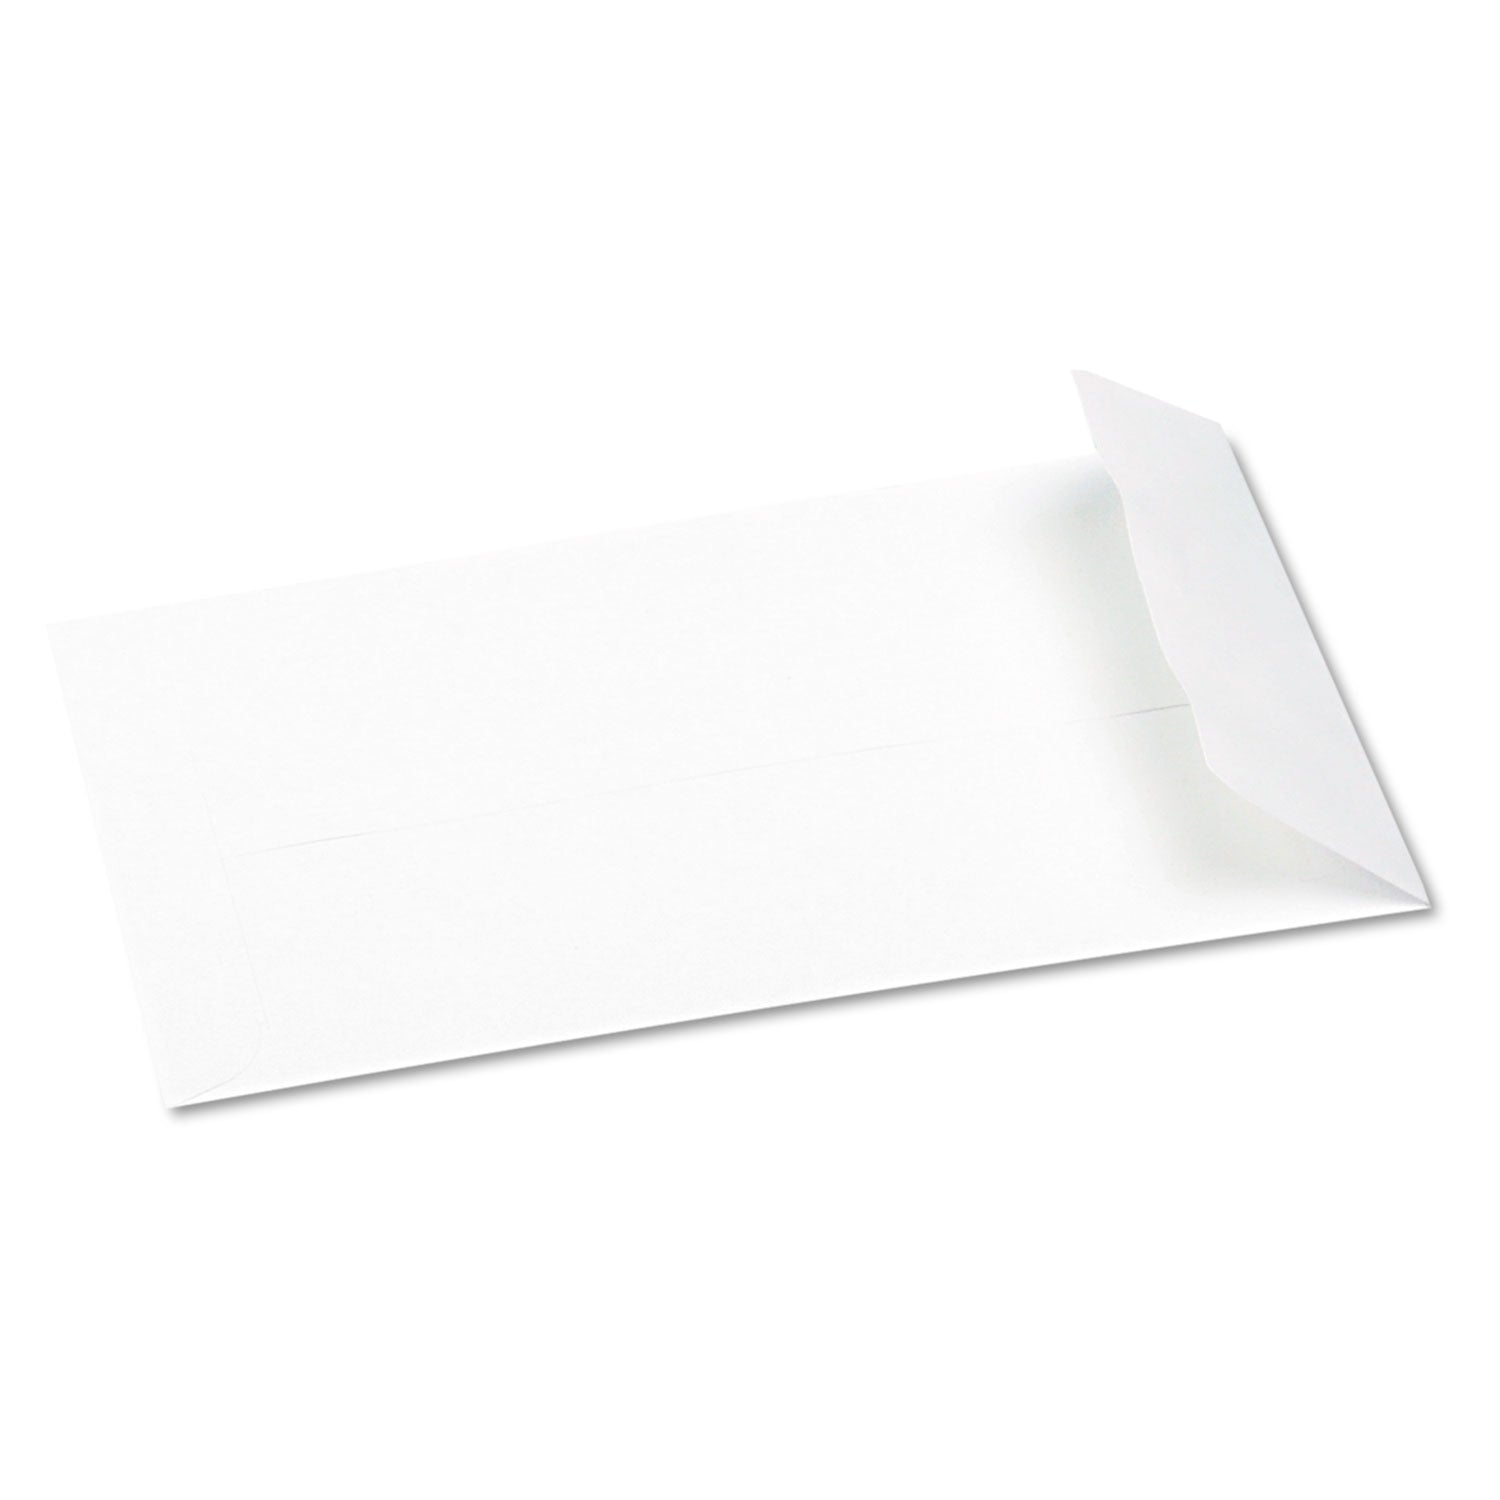 Redi-Seal Catalog Envelope, #1, Cheese Blade Flap, Redi-Seal Adhesive Closure, 6 x 9, White, 100/Box - 